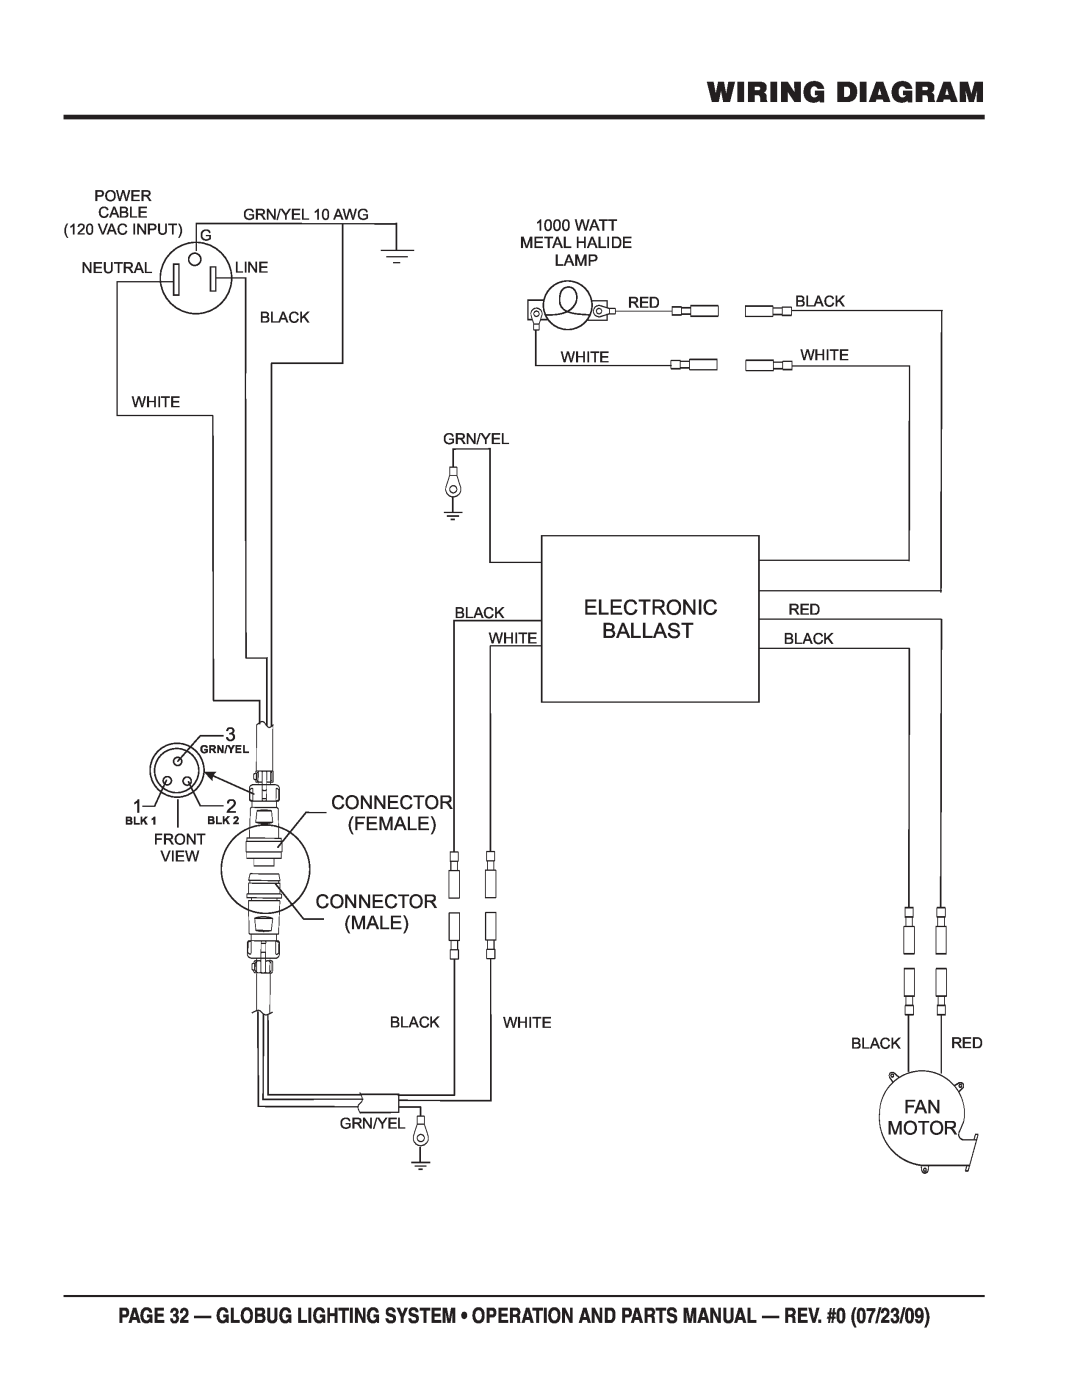 Multiquip GBWE, GBS, BGMP, GBHM, GBP manual Wiring Diagram, Connector Female Connector Male, Watt Metal Halide Lamp 